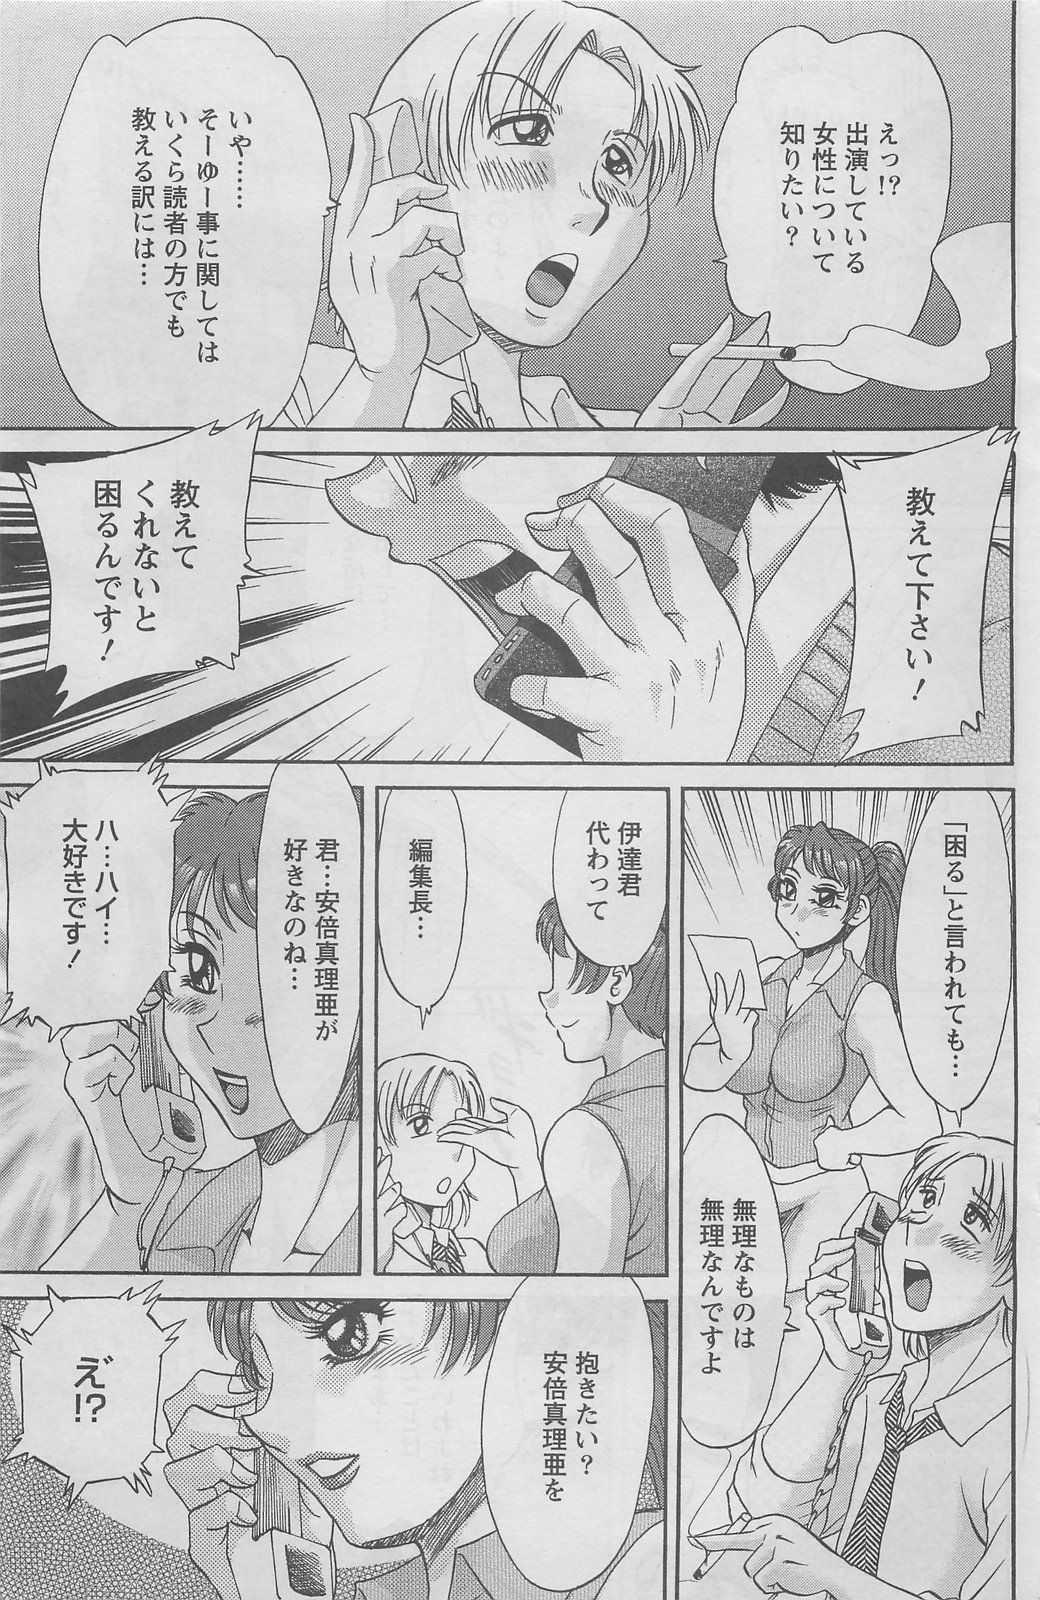 (Adult Manga) [Magazine] Pizazz DX 2008-06 